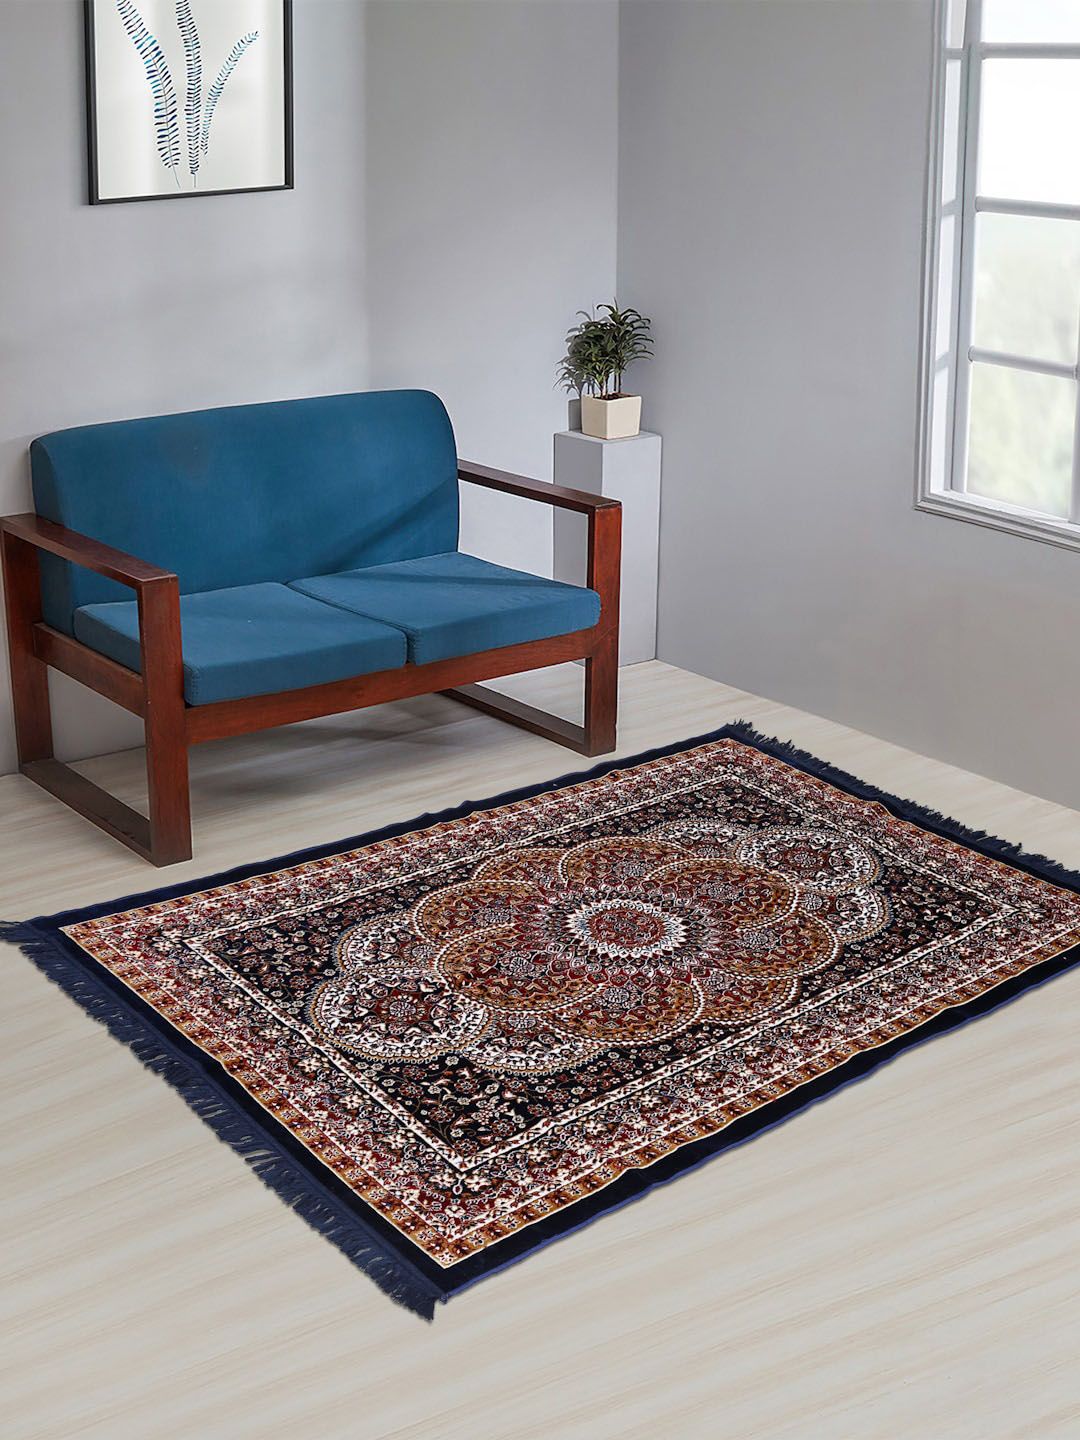 KLOTTHE Blue Floral Patterned Handmade Carpet- 205X150 cm Price in India